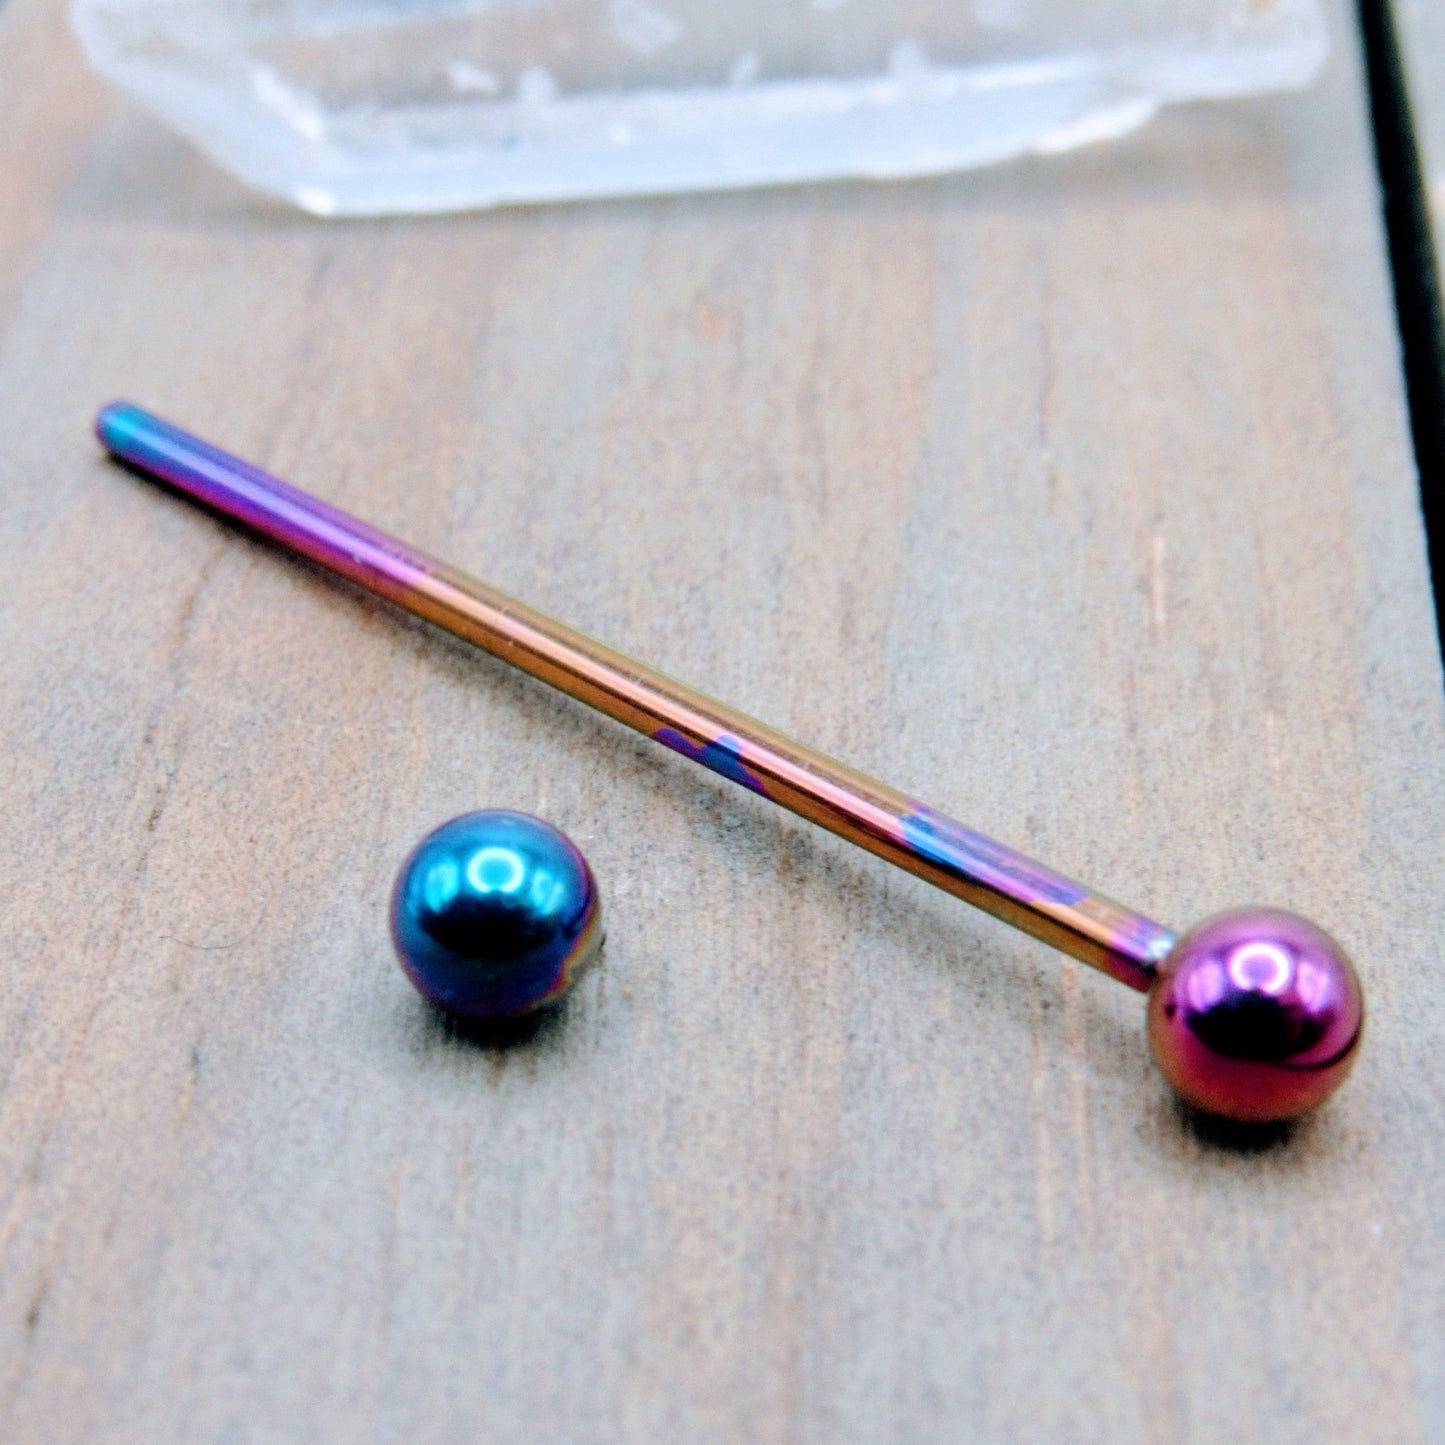 14g Rainbow titanium anodized industrial piercing barbell 5mm ball ends internally threaded scaffold bar - Siren Body Jewelry